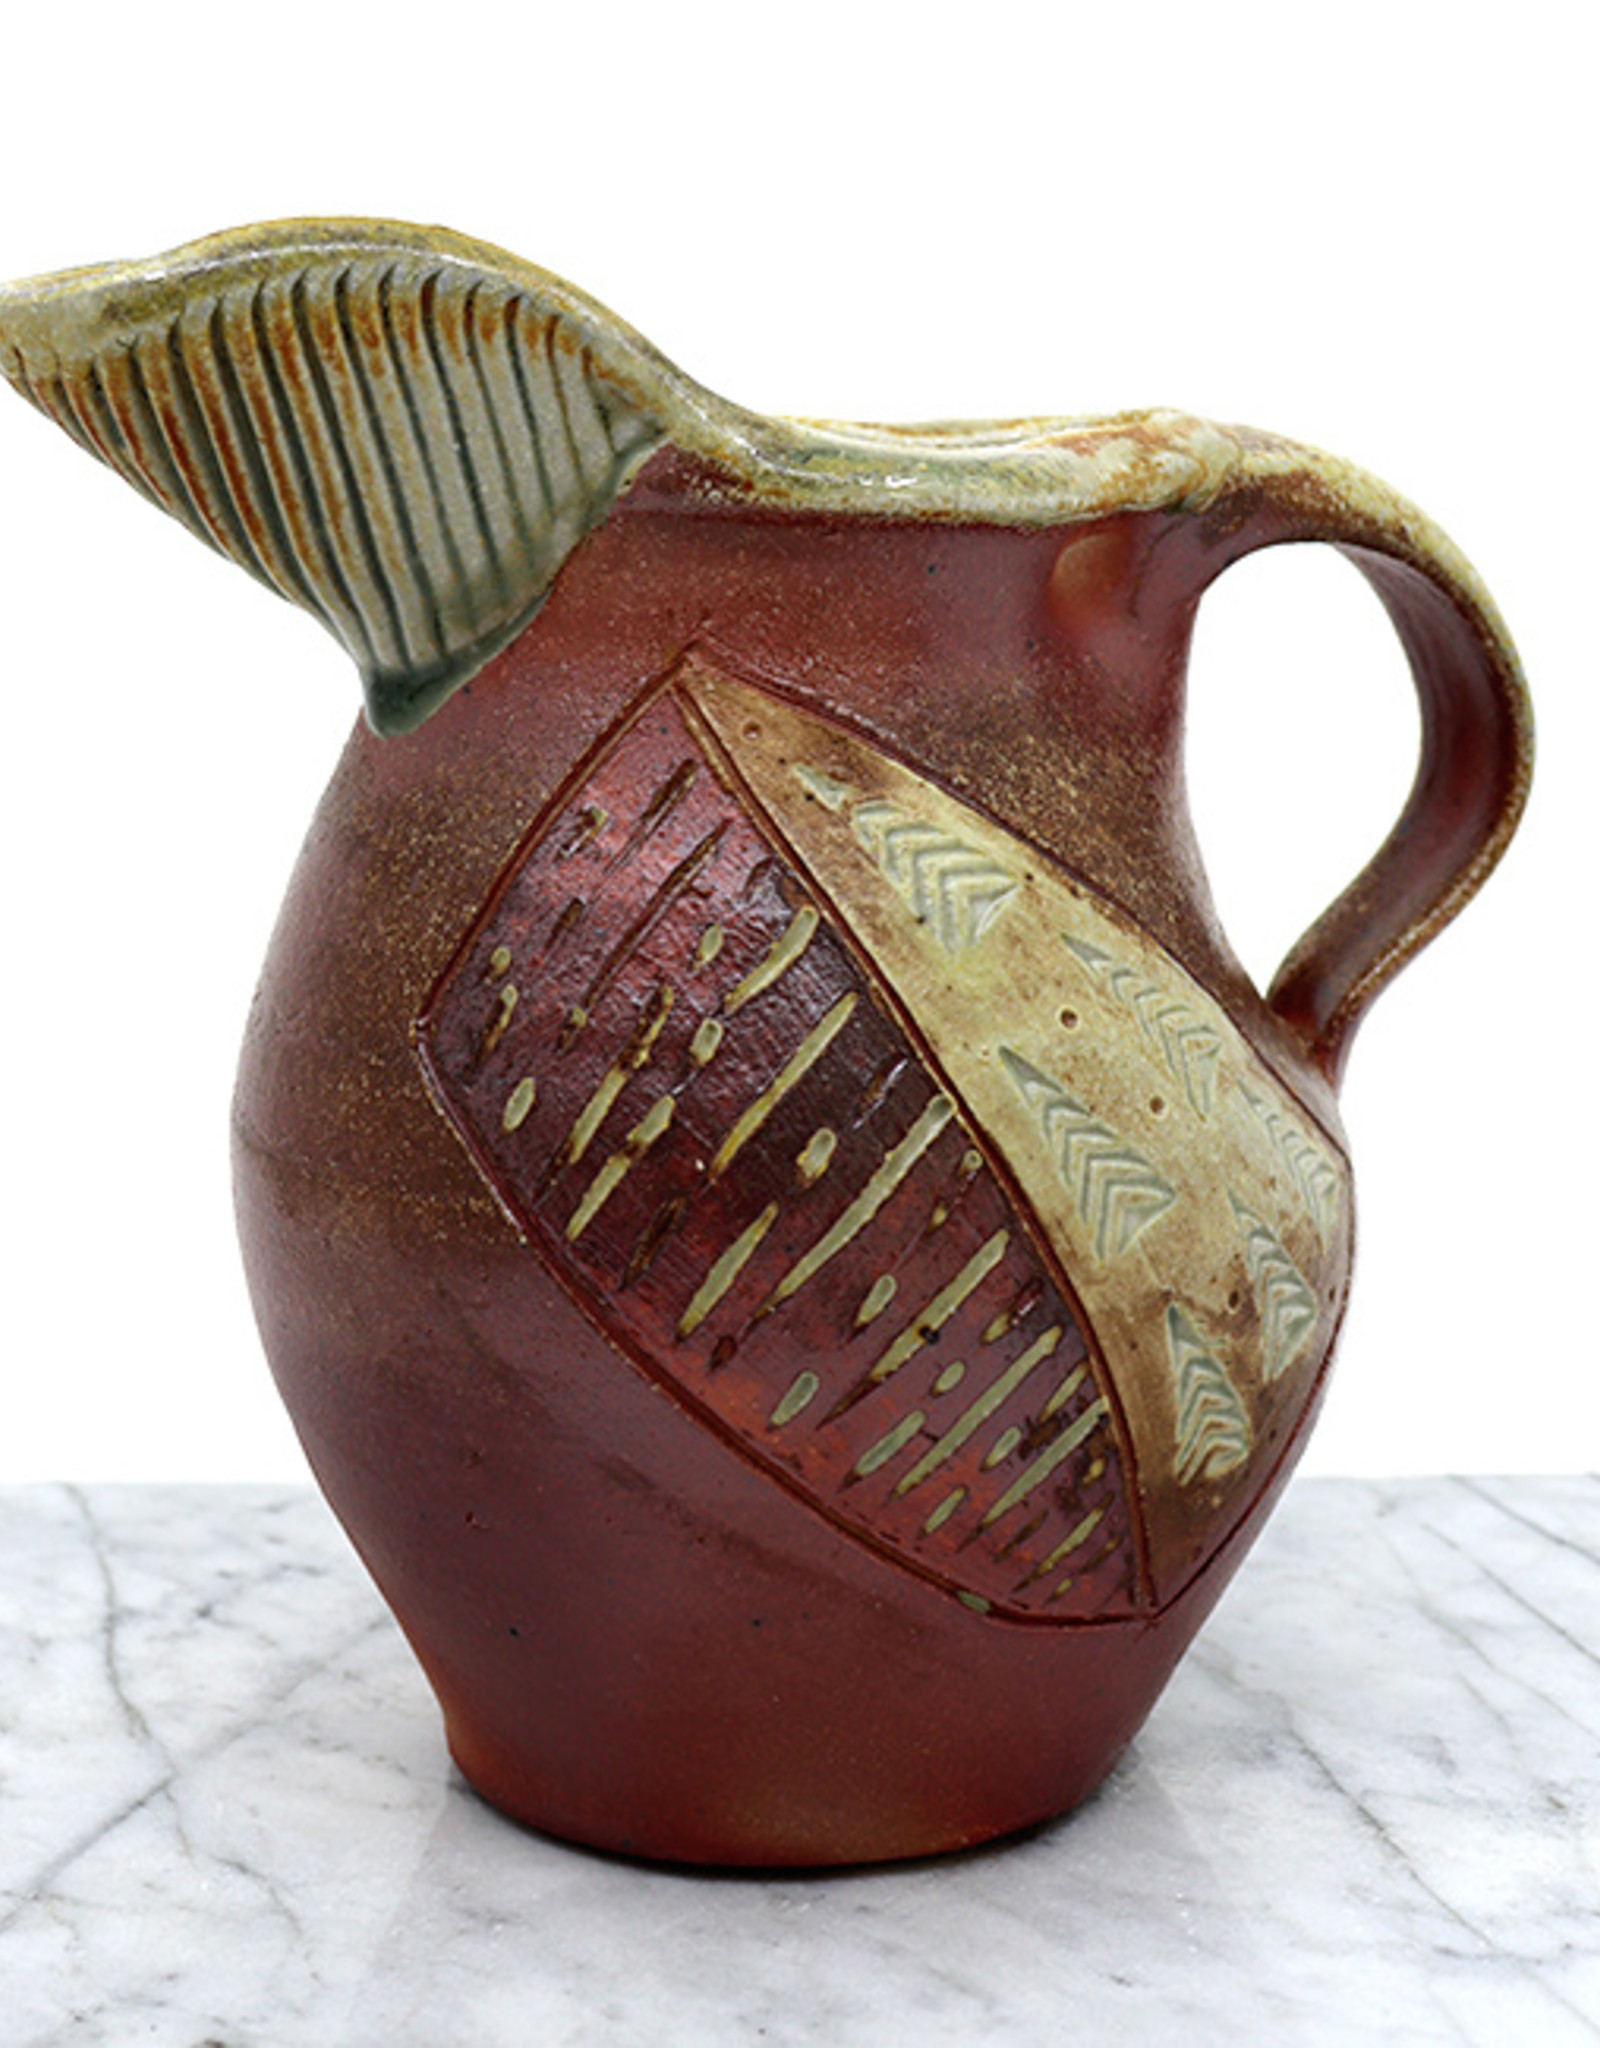 Woodfired jug